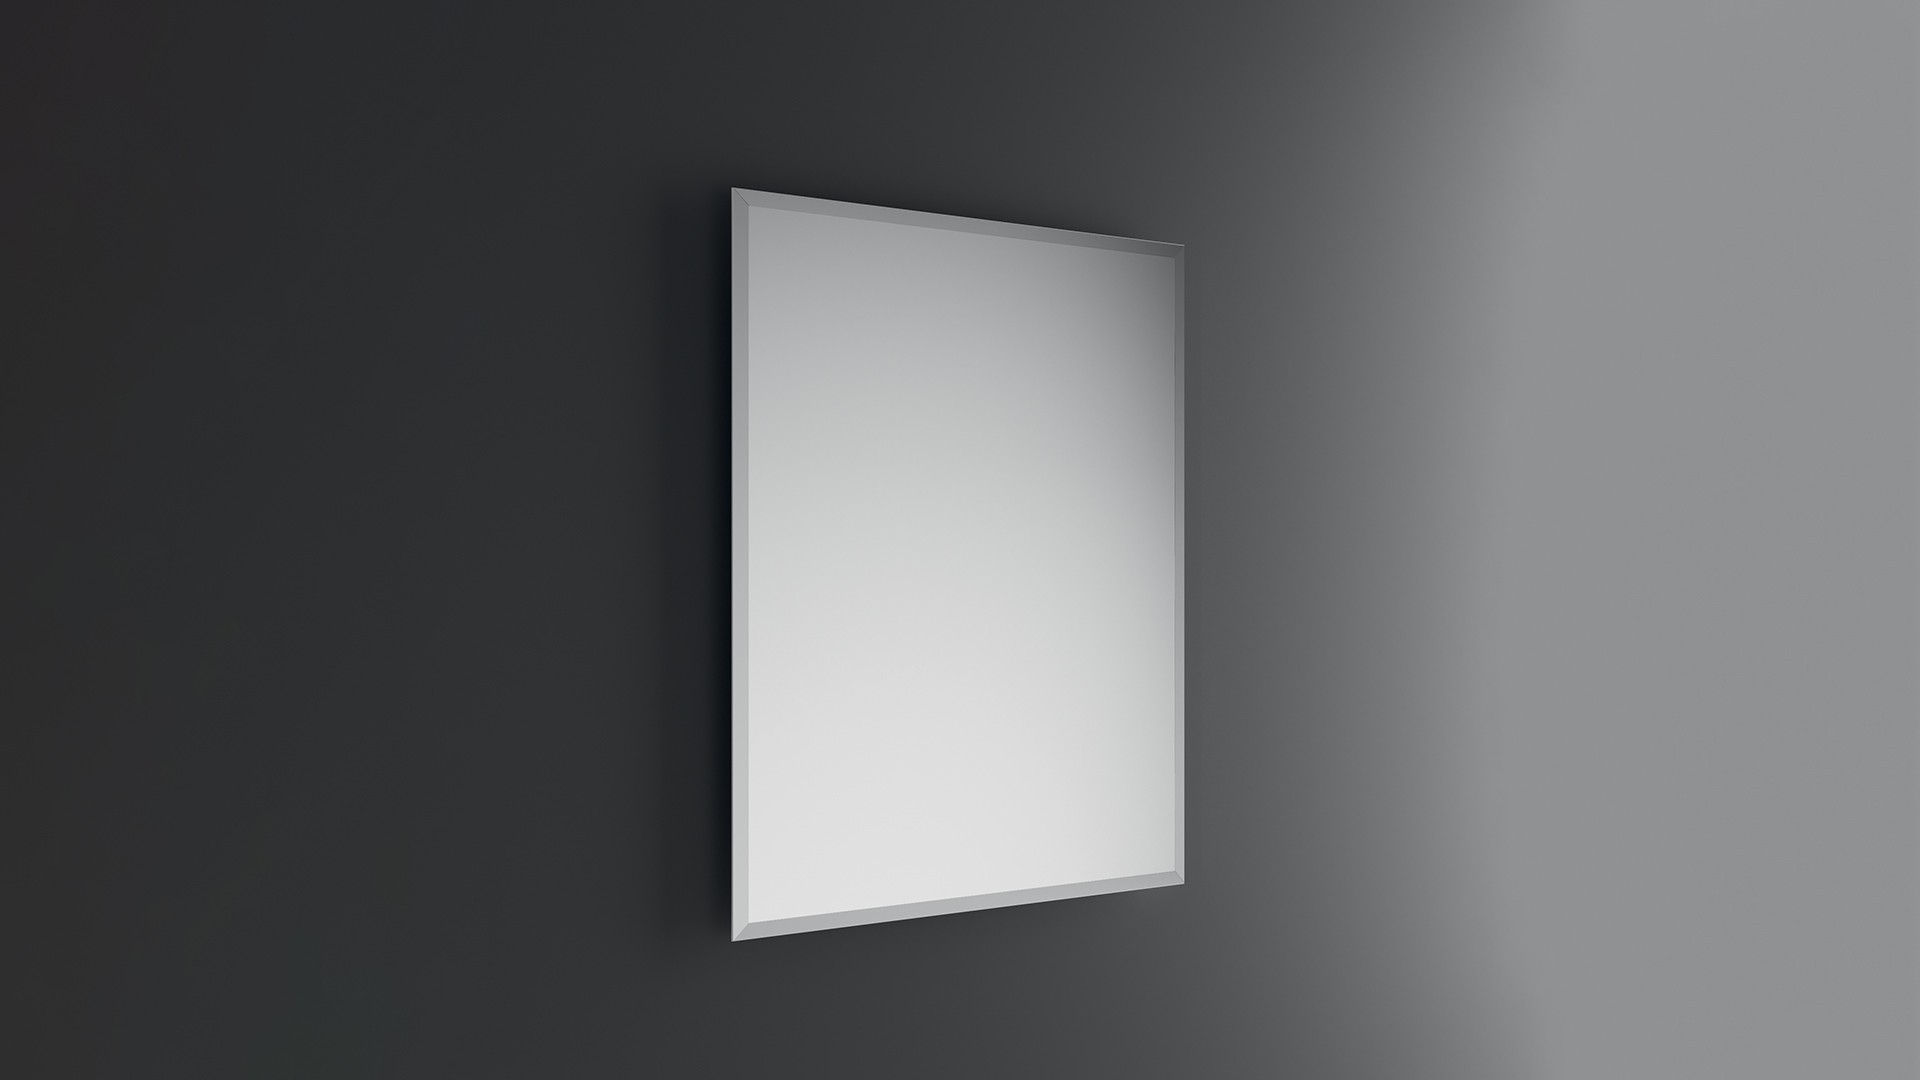 Inda Fast Block Mirror Rectangular Bevelled Edge 60 x 80h cm [AS1320]